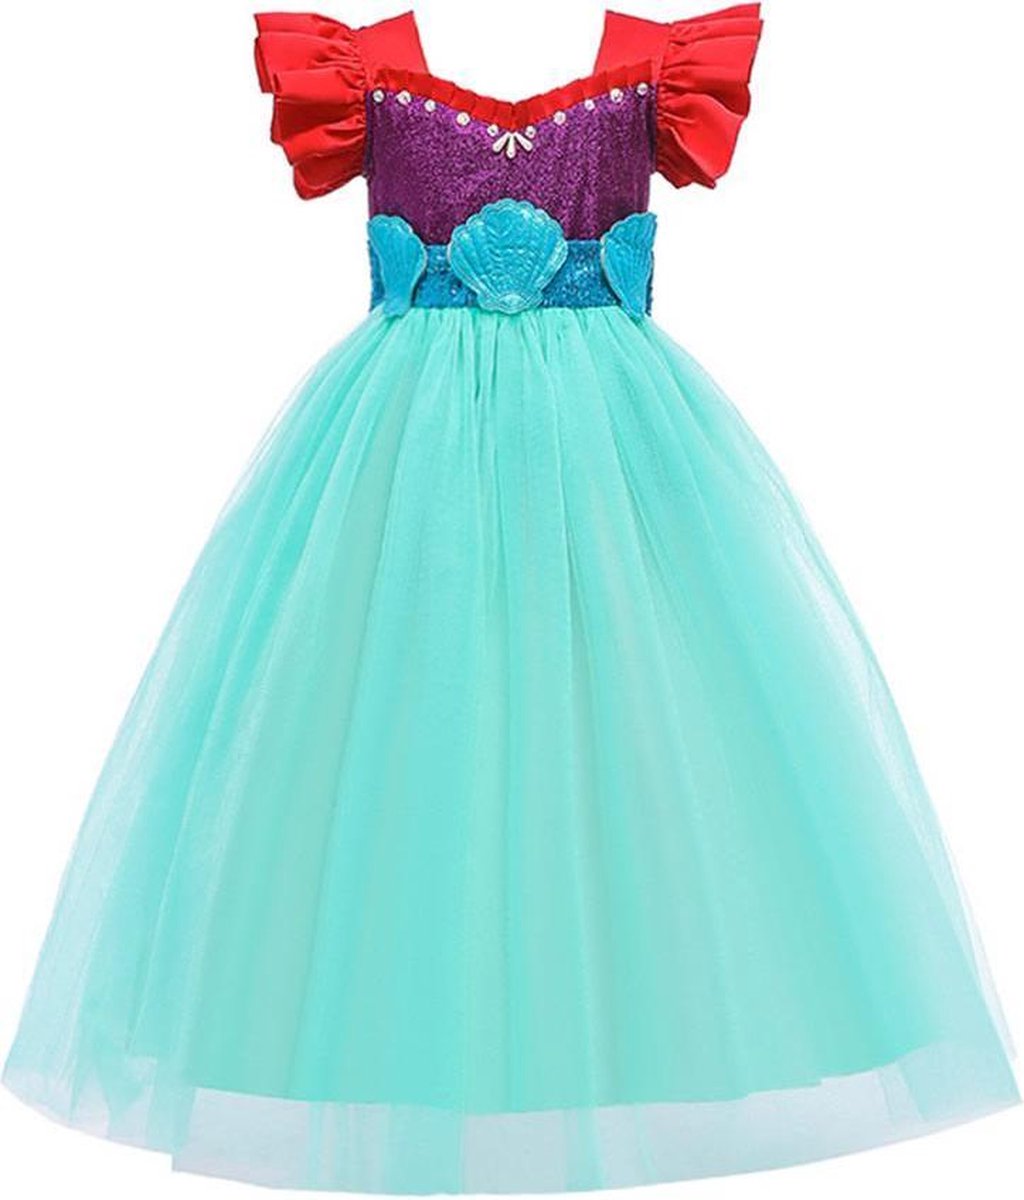 Prinses - Zeemeermin Ariel jurk - De Kleine Zeemeermin - Prinsessenjurk - Verkleedkleding - Zeegroen - 110/116 (4/5 jaar)